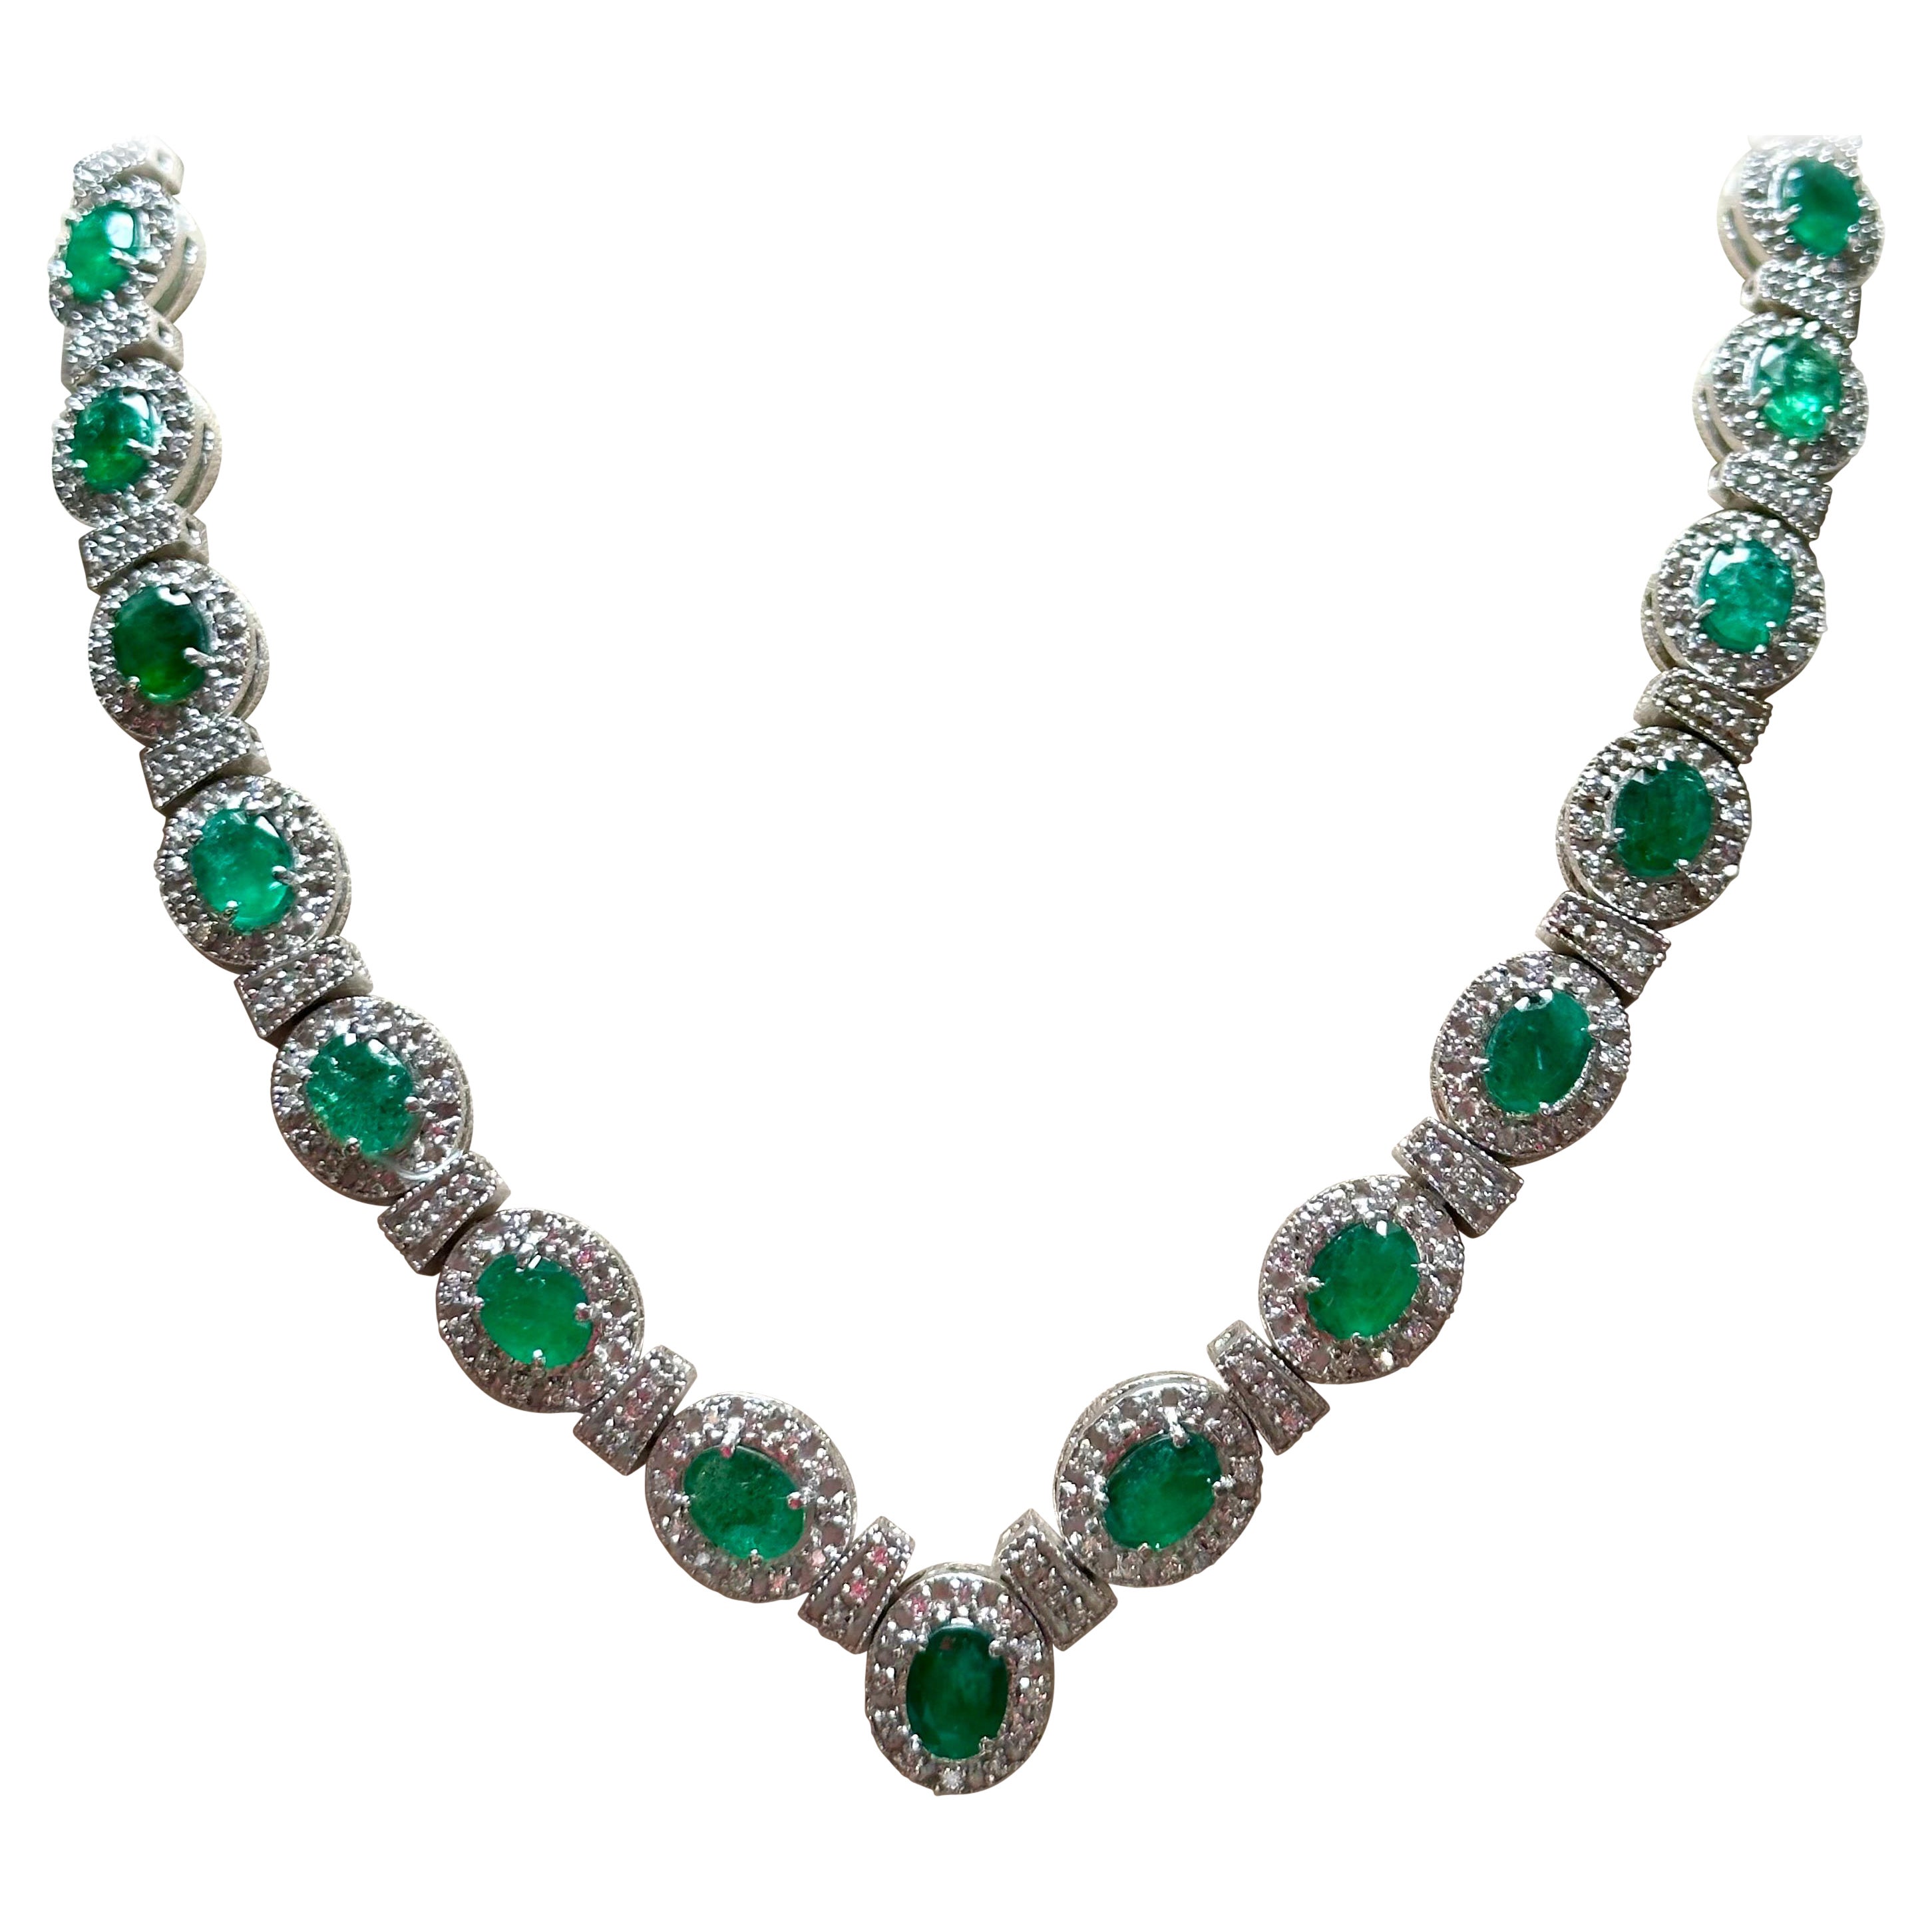 28 Carat Oval Shape Natural Emerald & 5 Carat Diamond Necklace in 14 Karat Gold For Sale